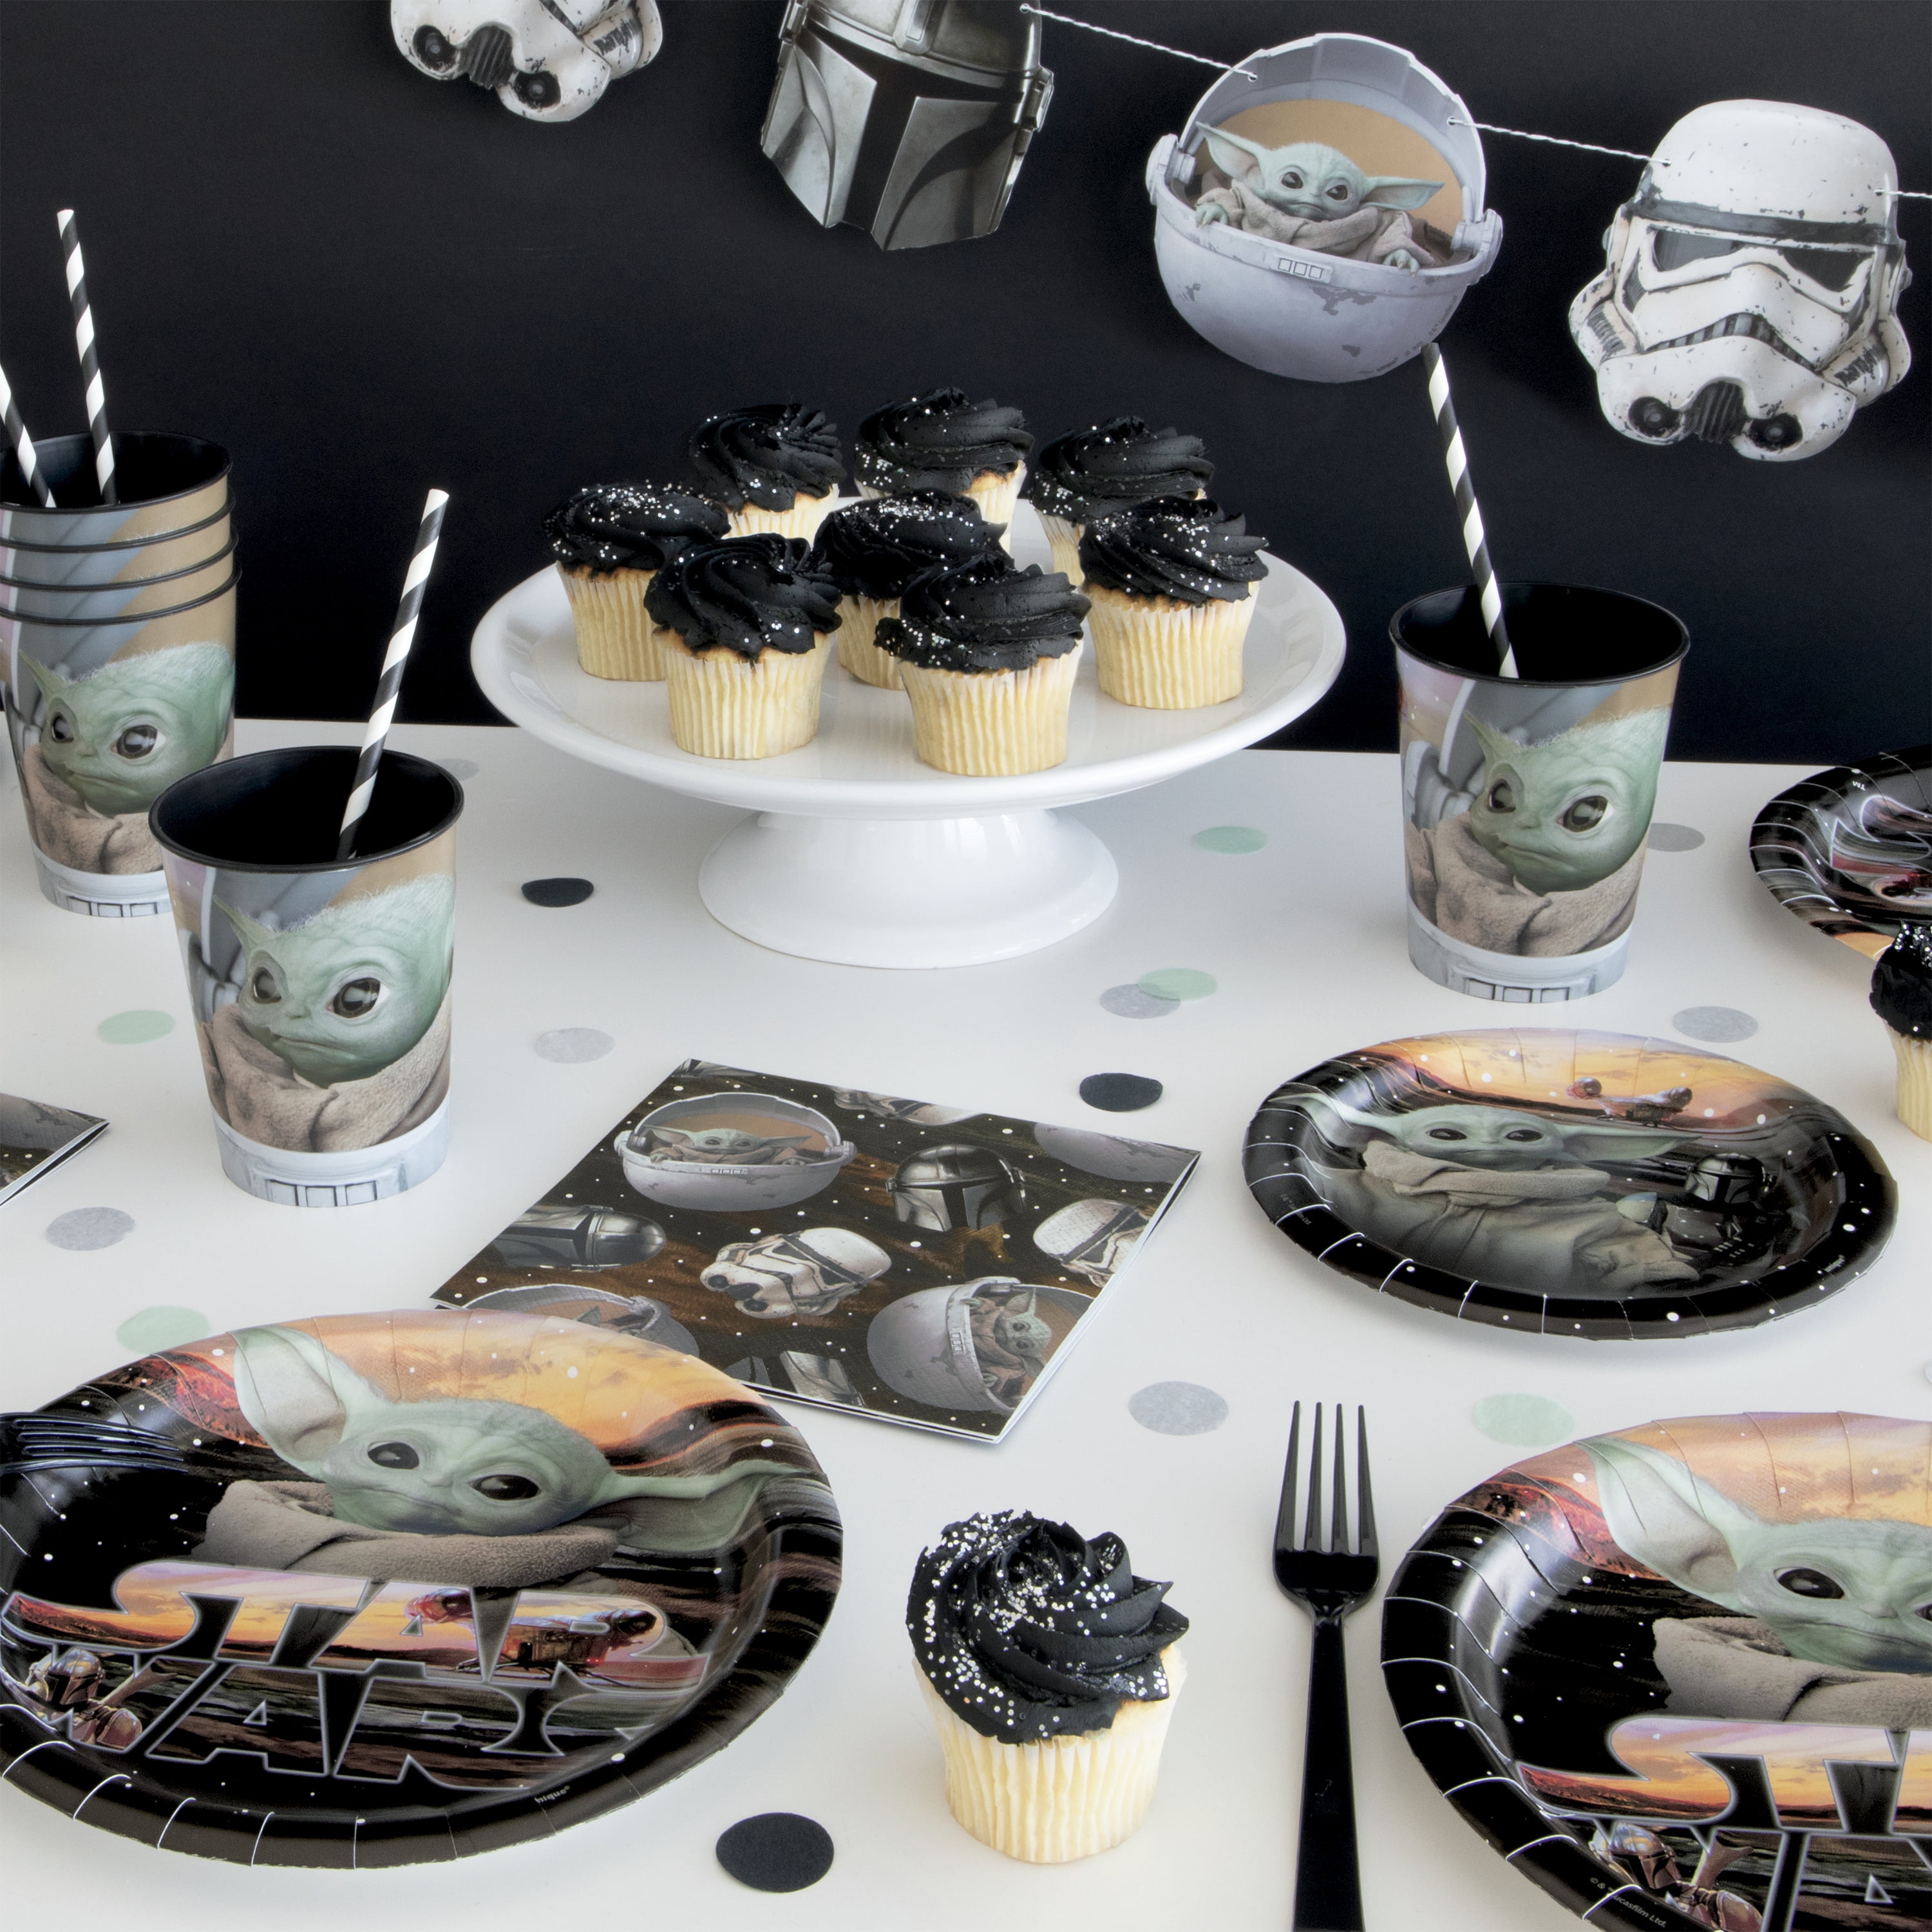  Star Wars Party Souvenir Cup - Star Wars 16 Oz Plastic